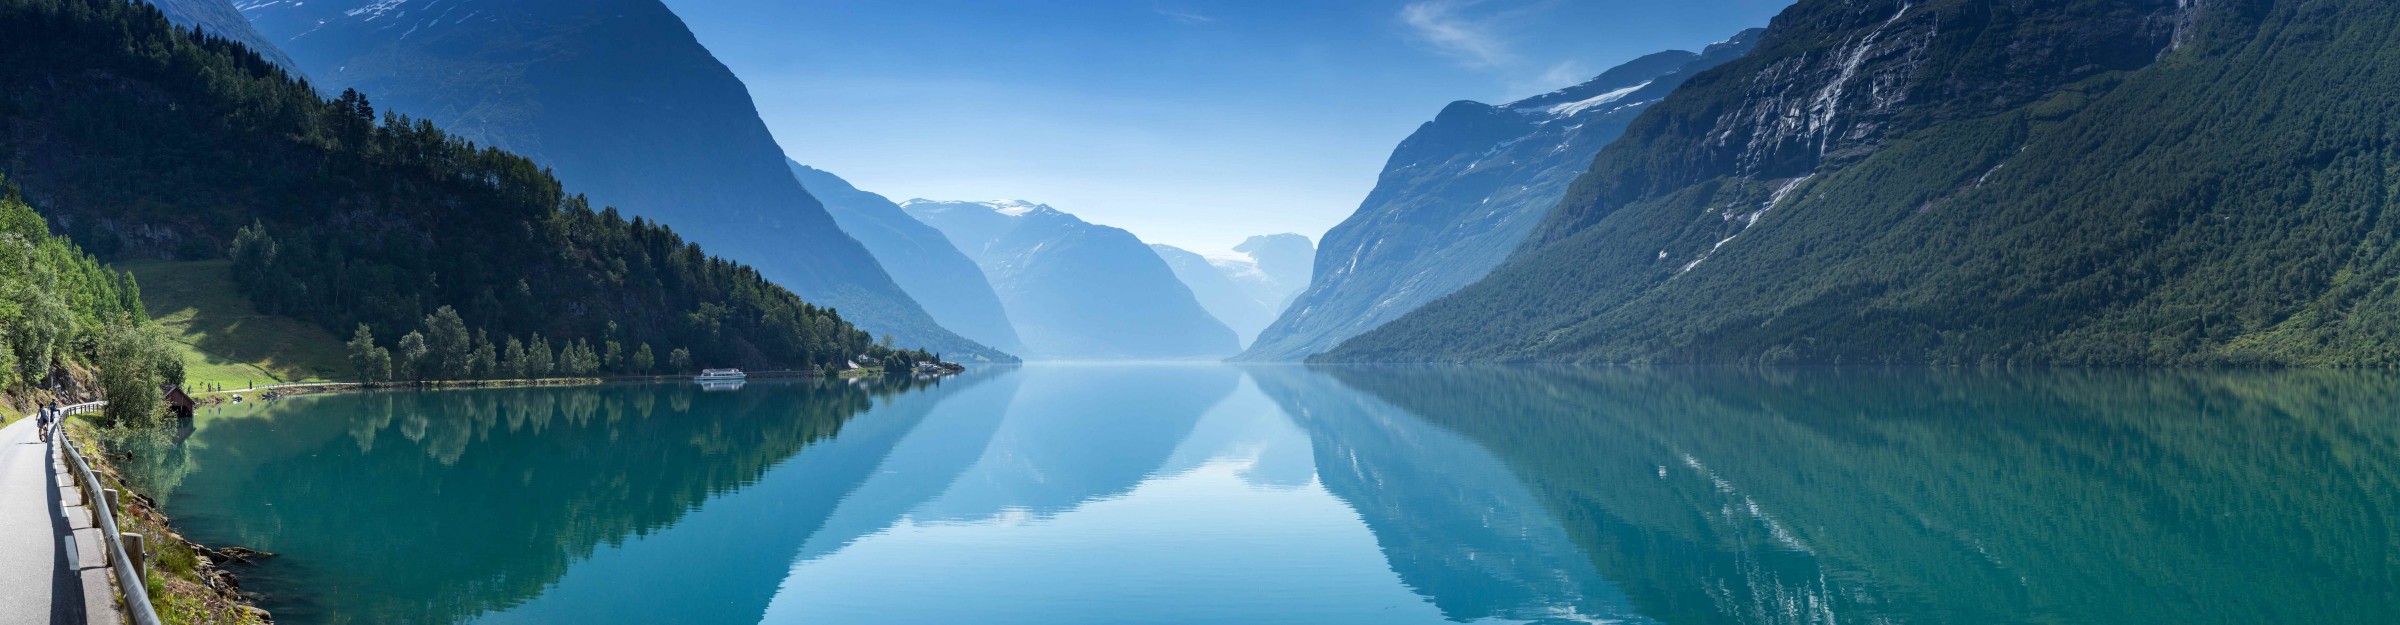 Norvégia varázslatos fjordvidéke